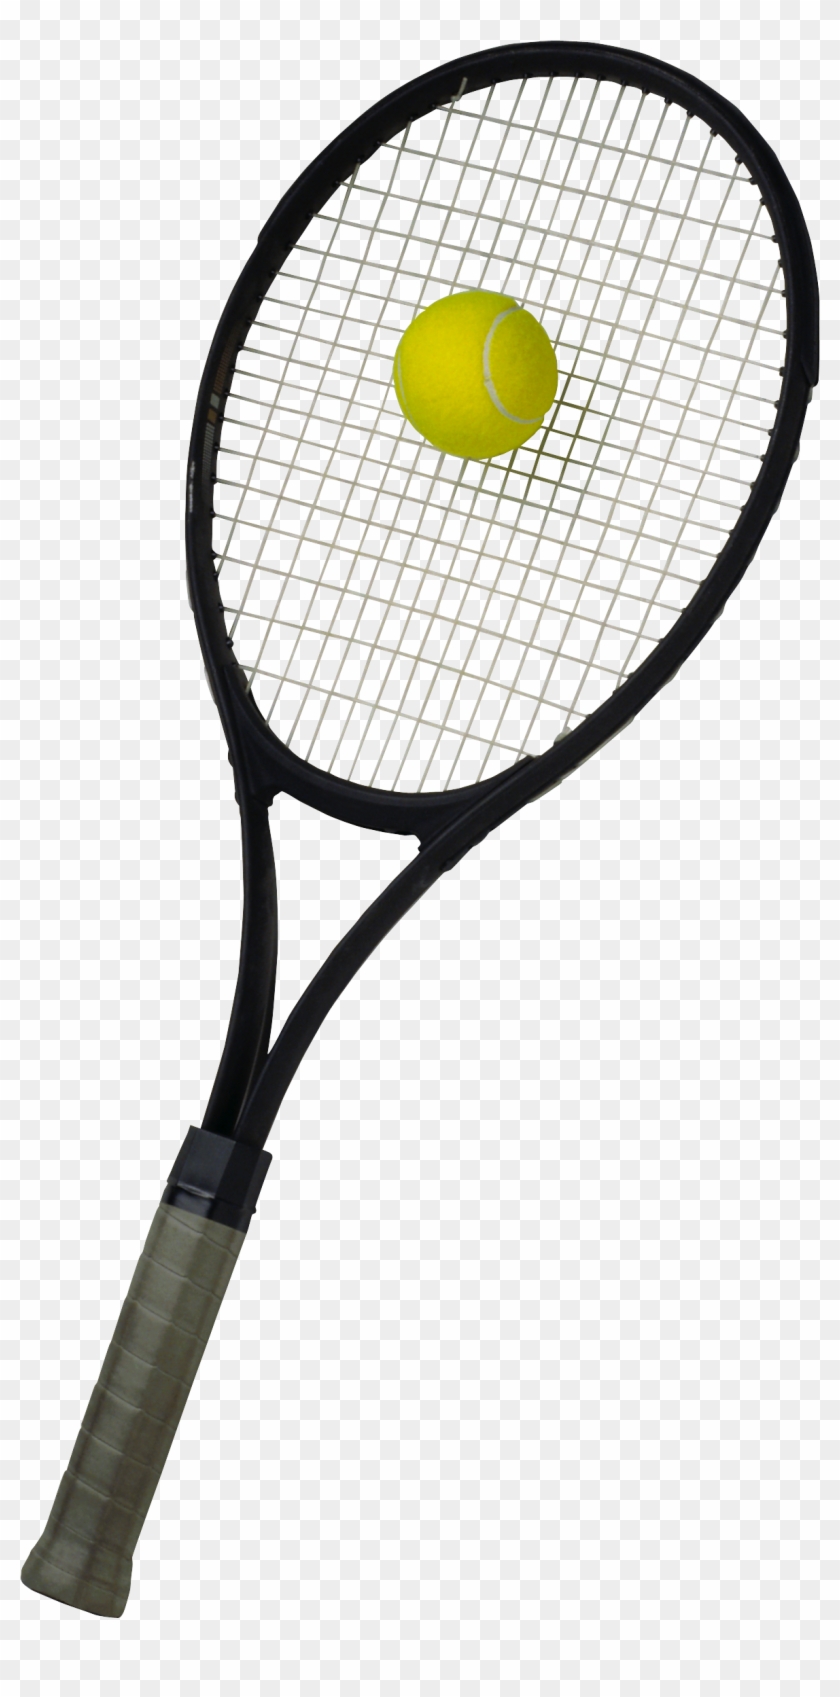 Tennis Racket Png Image - Tennis Racket Transparent Background #807475